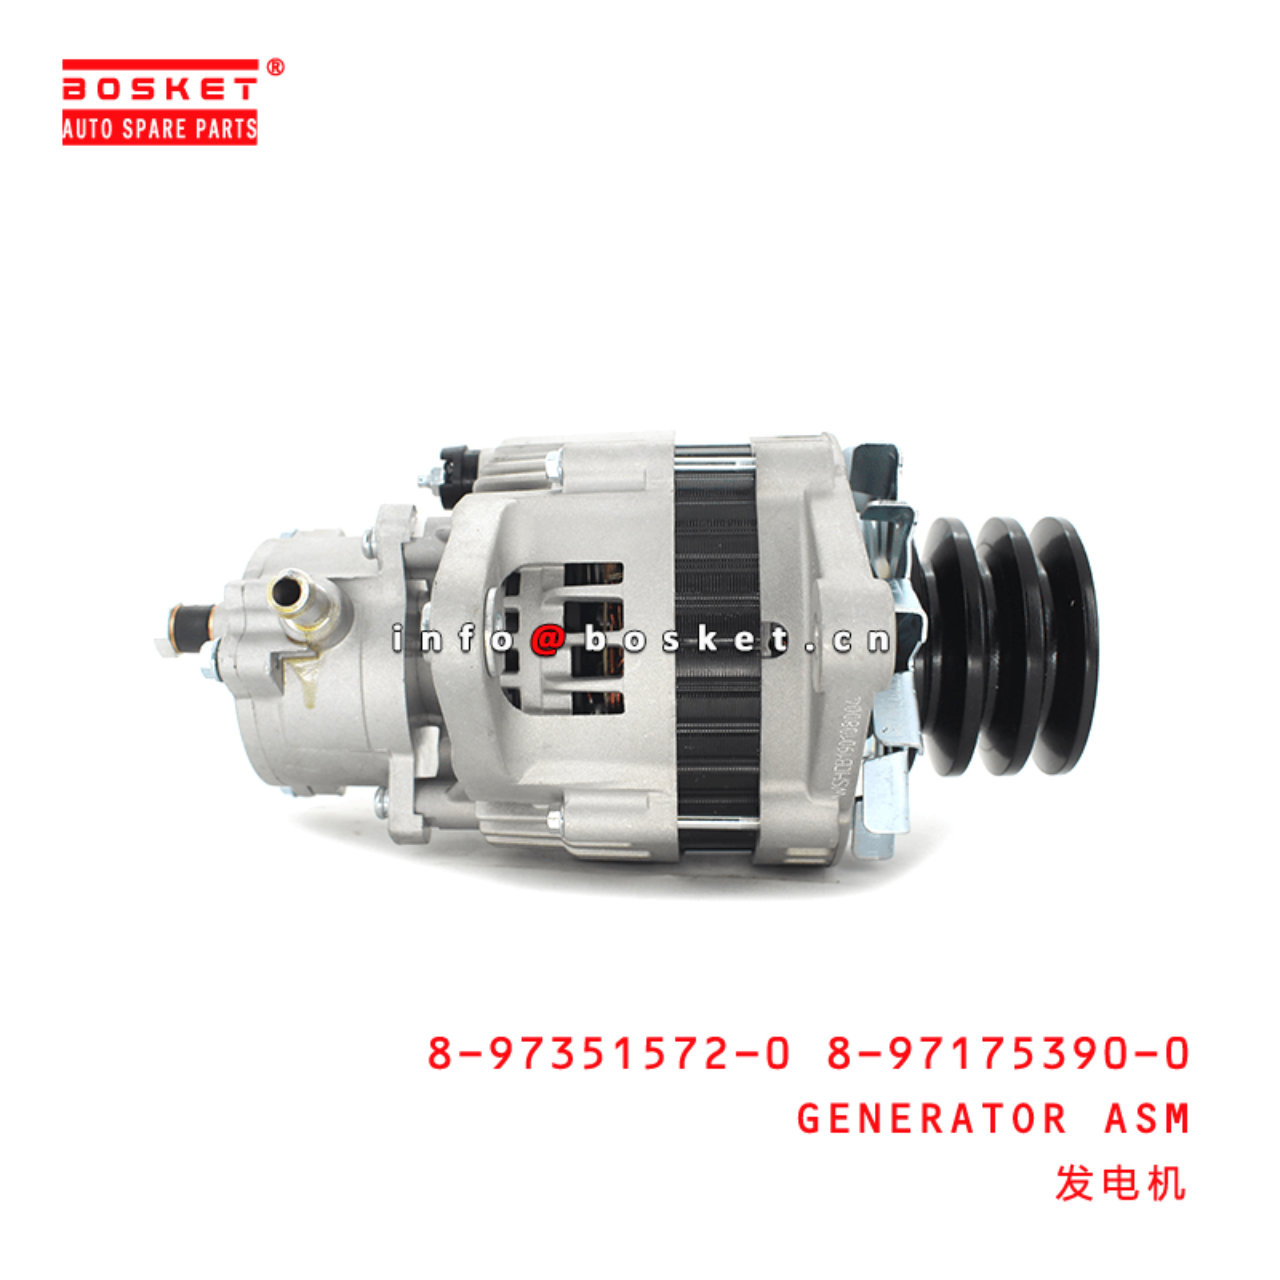 8-97351572-0 8-97175390-0 Generator Assembly Suitable for ISUZU NPR66 4HF1 4HG1 4HE1